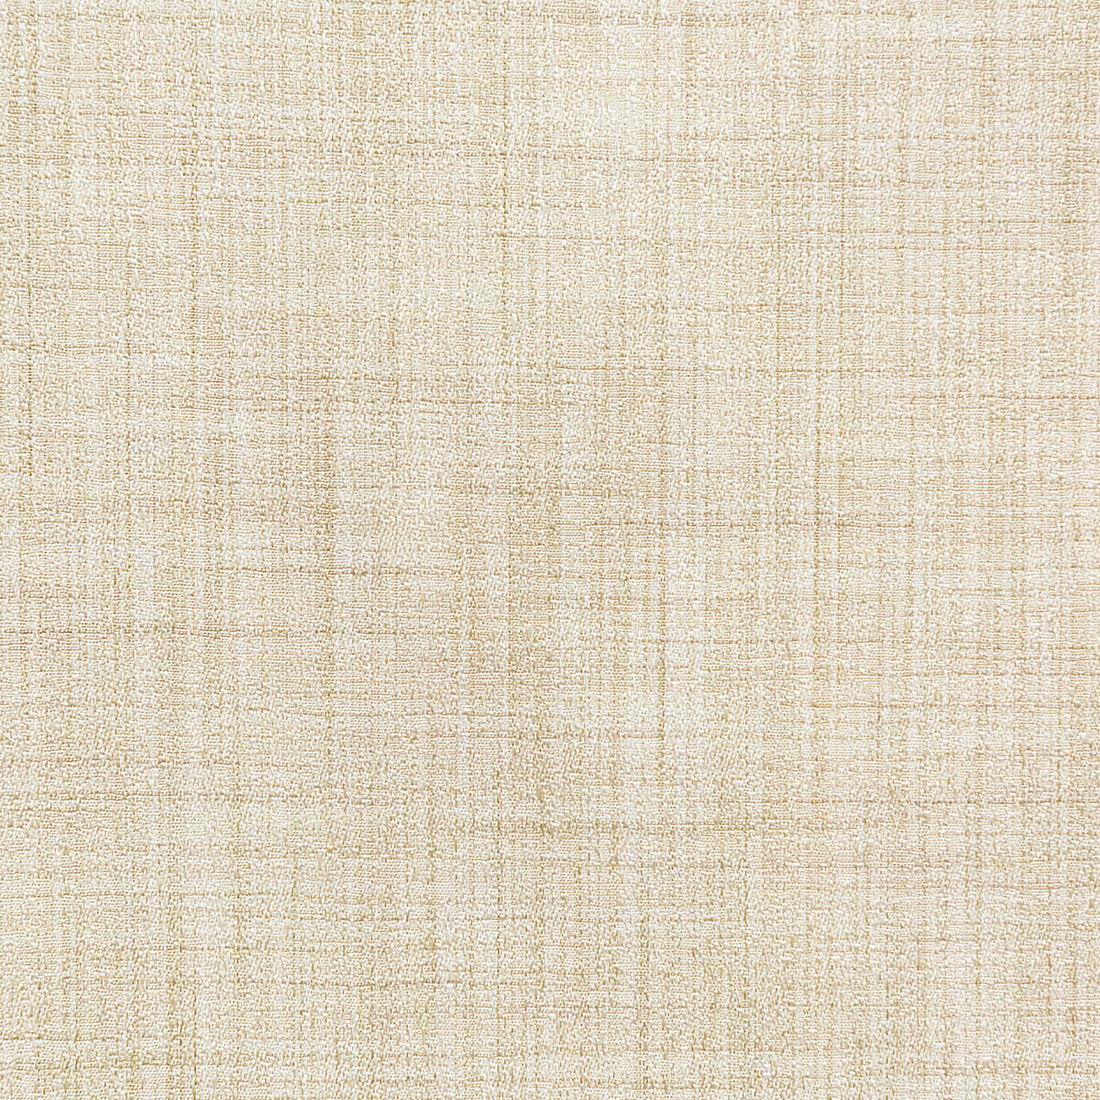 Kravet Basics fabric in 4650-1 color - pattern 4650.1.0 - by Kravet Contract